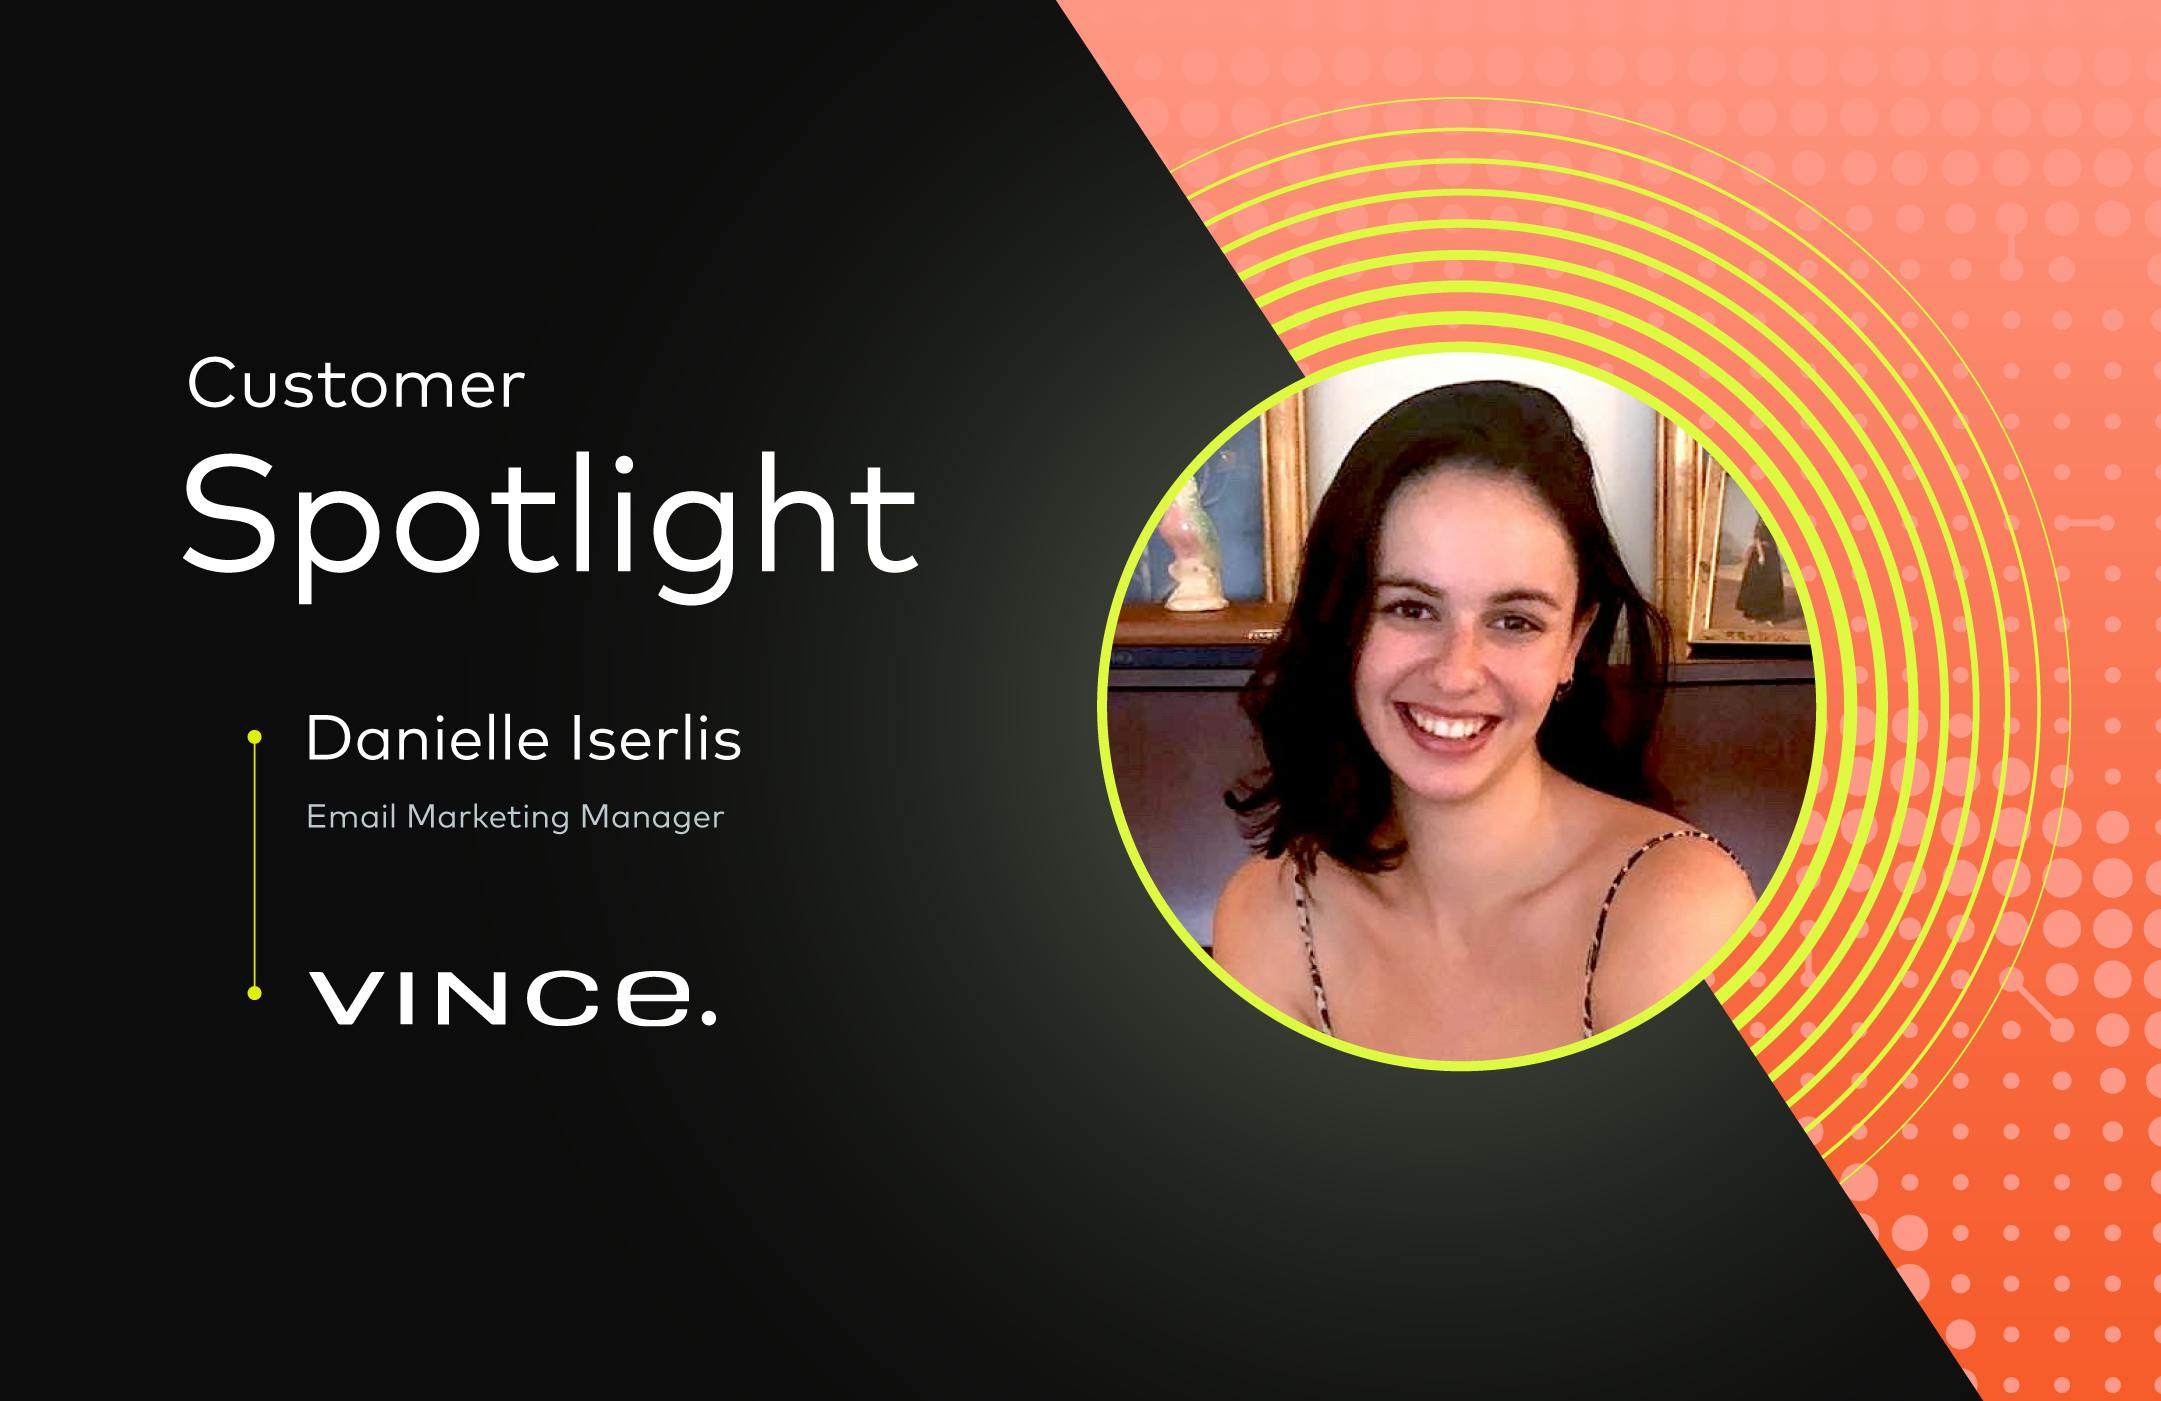 Image of Danielle Inserlis and words stating: Customer Spotlight, Danielle Iserlis. 